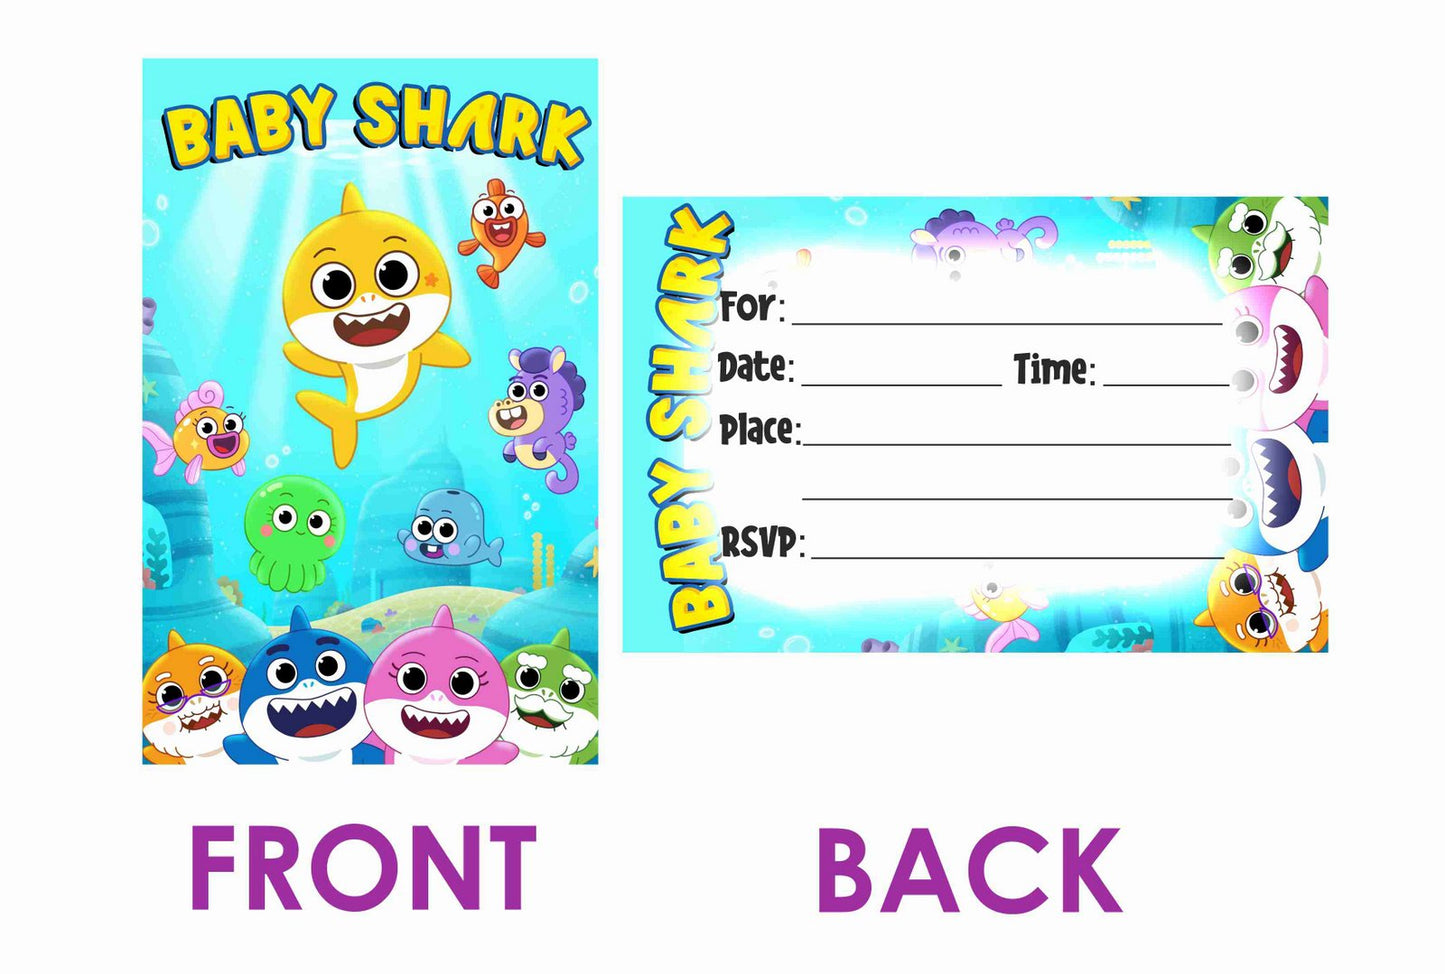 Baby Shark Theme Children's Birthday Party Invitations Cards with Envelopes - Kids Birthday Party Invitations for Boys or Girls,- Invitation Cards (Pack of 10)